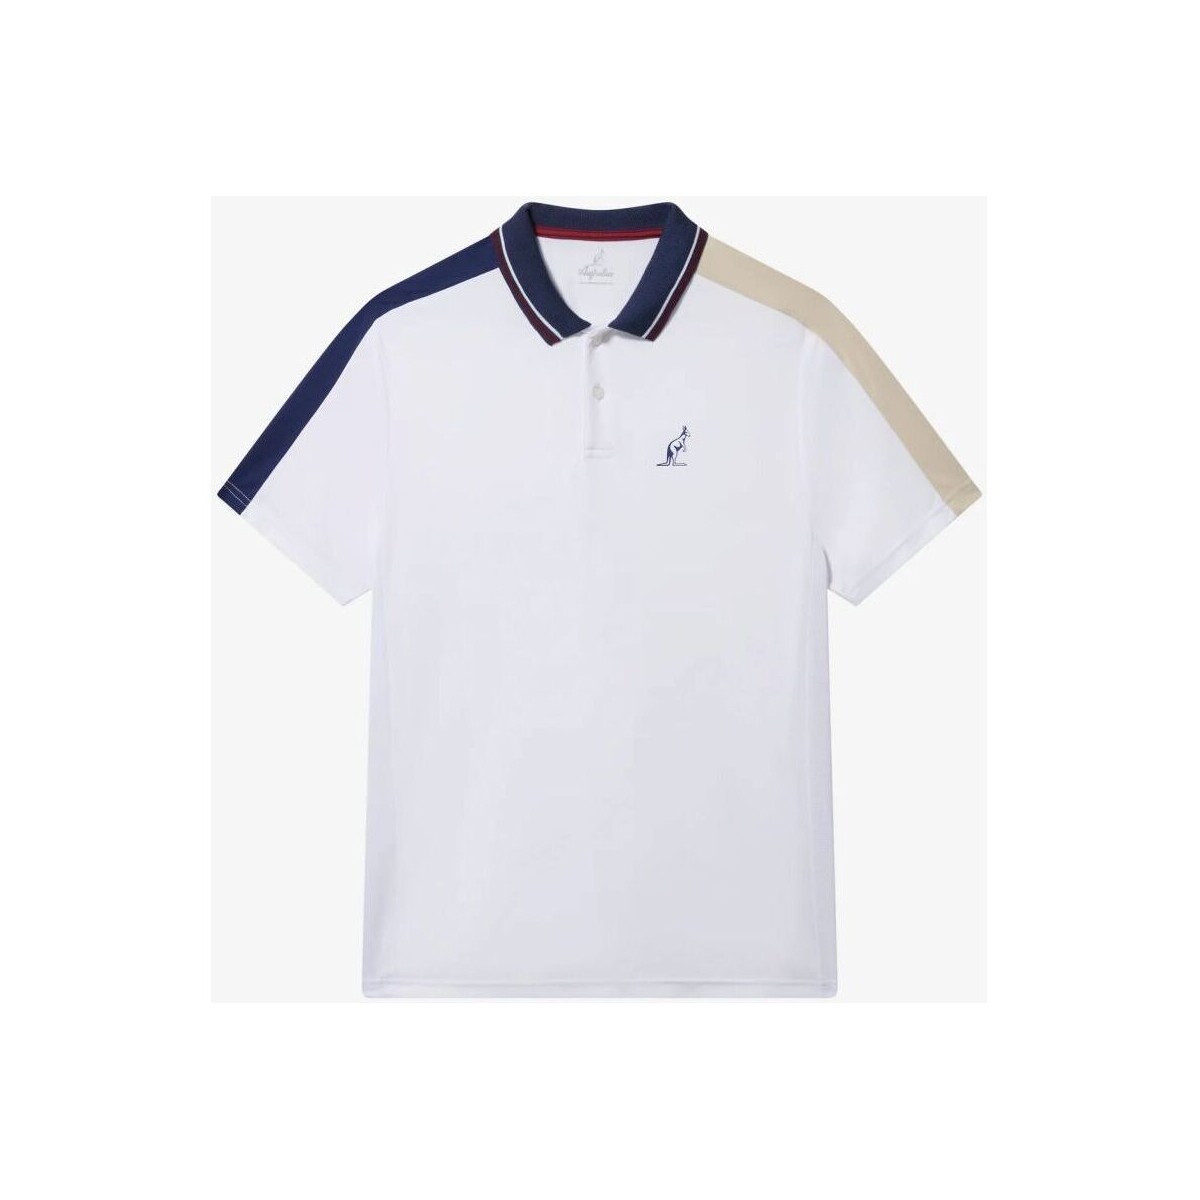 textil Hombre Tops y Camisetas Australian TEUPO0027 POLO LEGEND-002 BIANCO Blanco